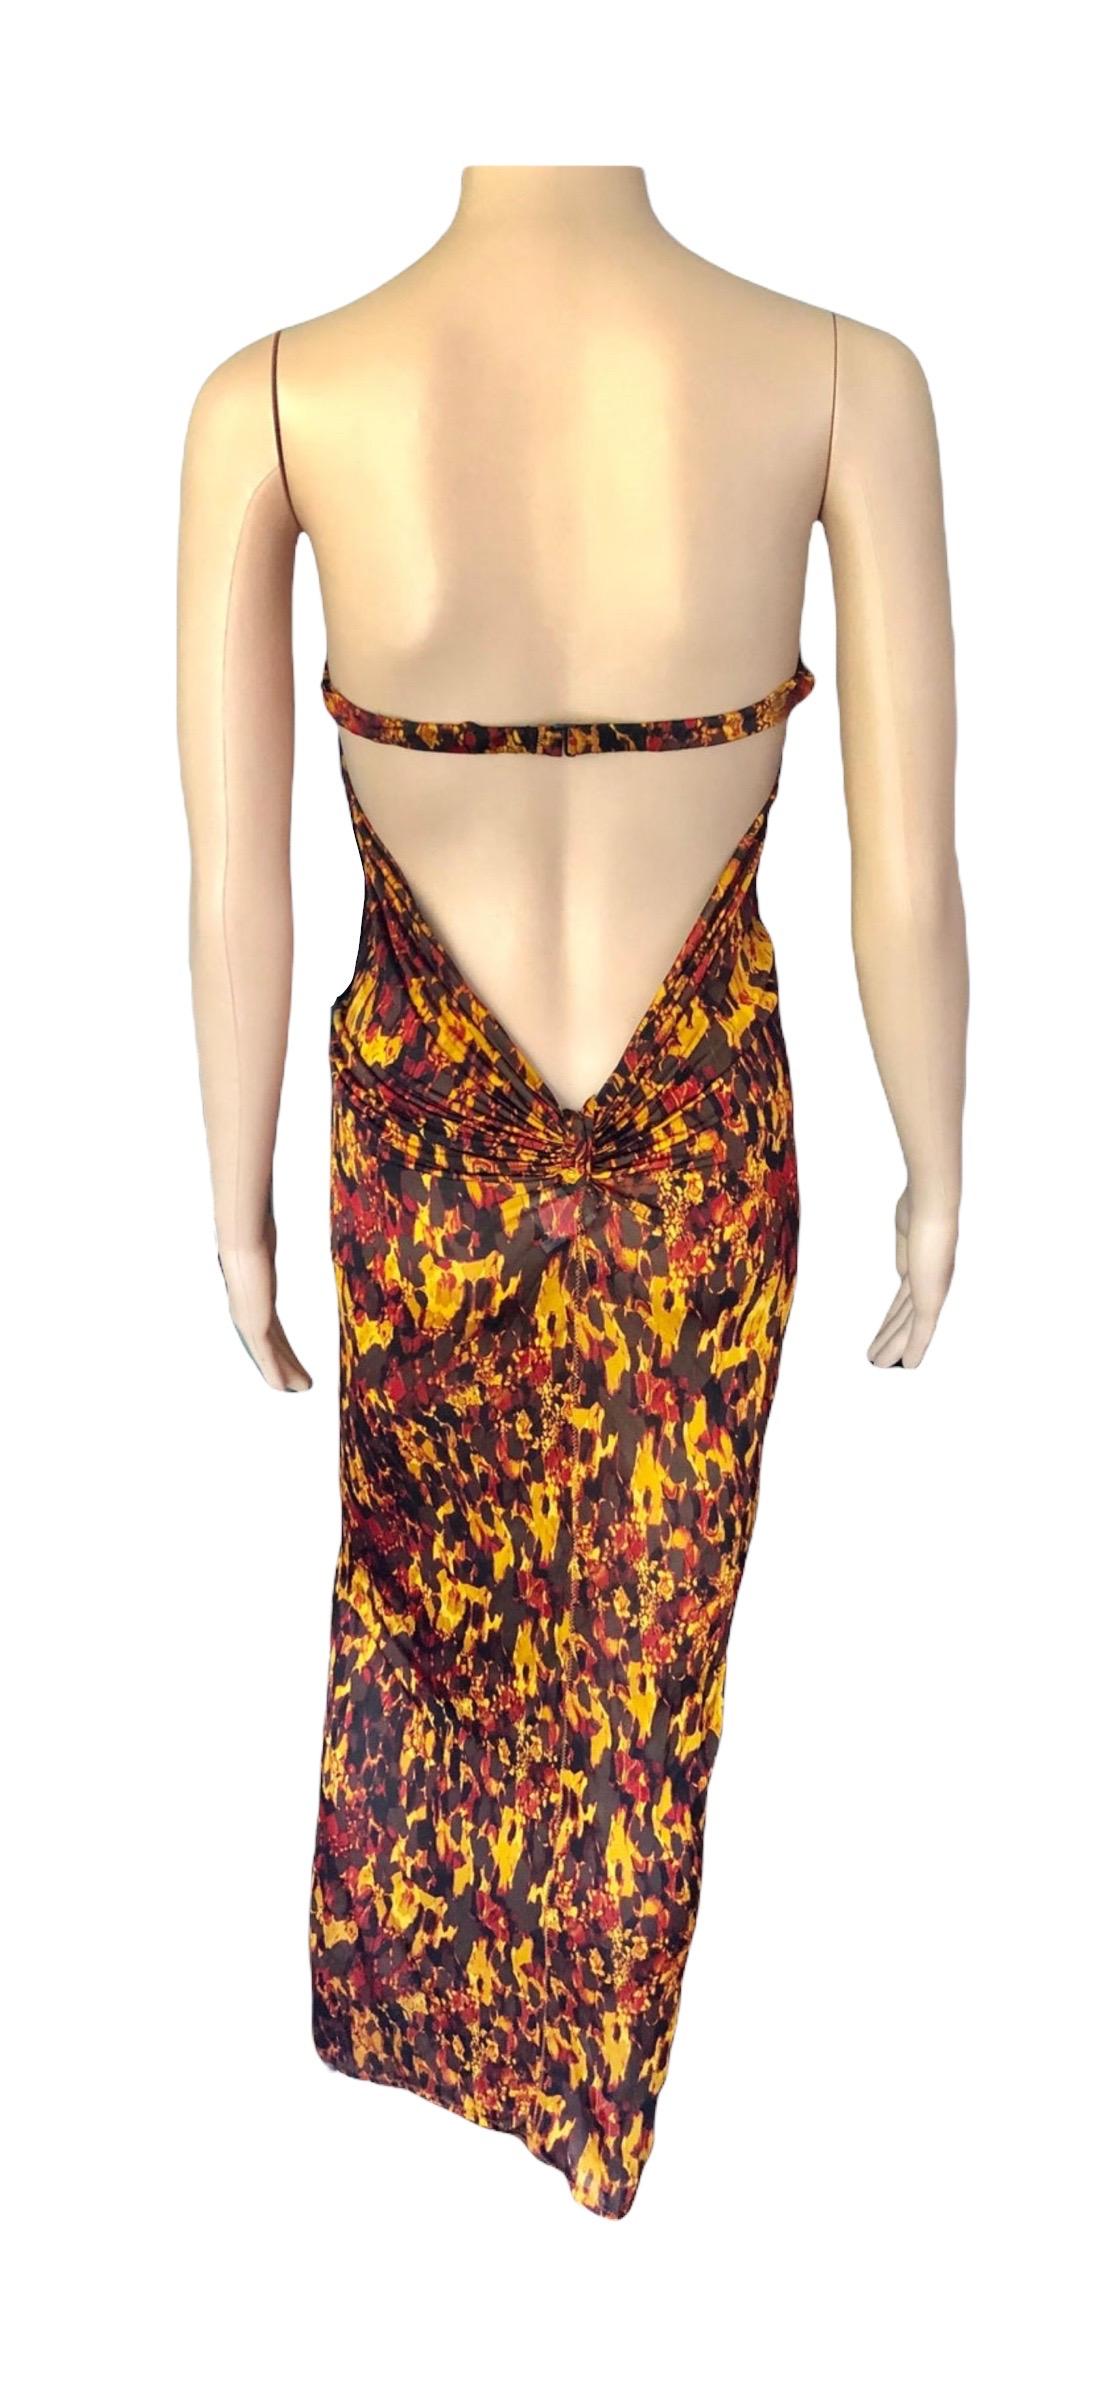 Jean Paul Gaultier S/S 1997 Vintage Embellished Open Back Maxi Evening Dress For Sale 2